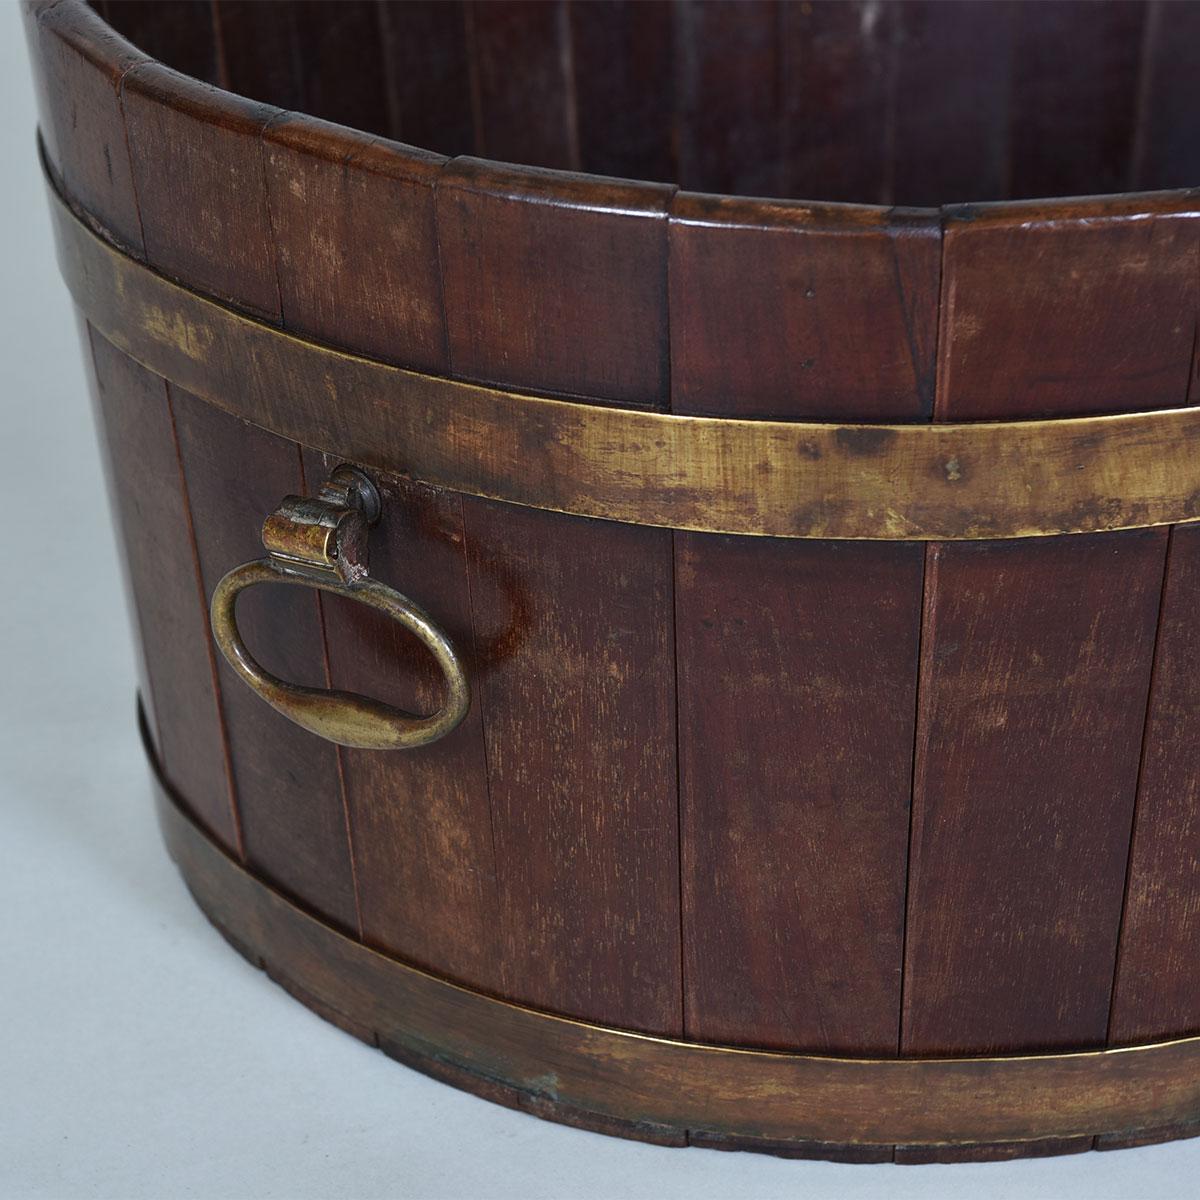 19th century mahogany wine cooler